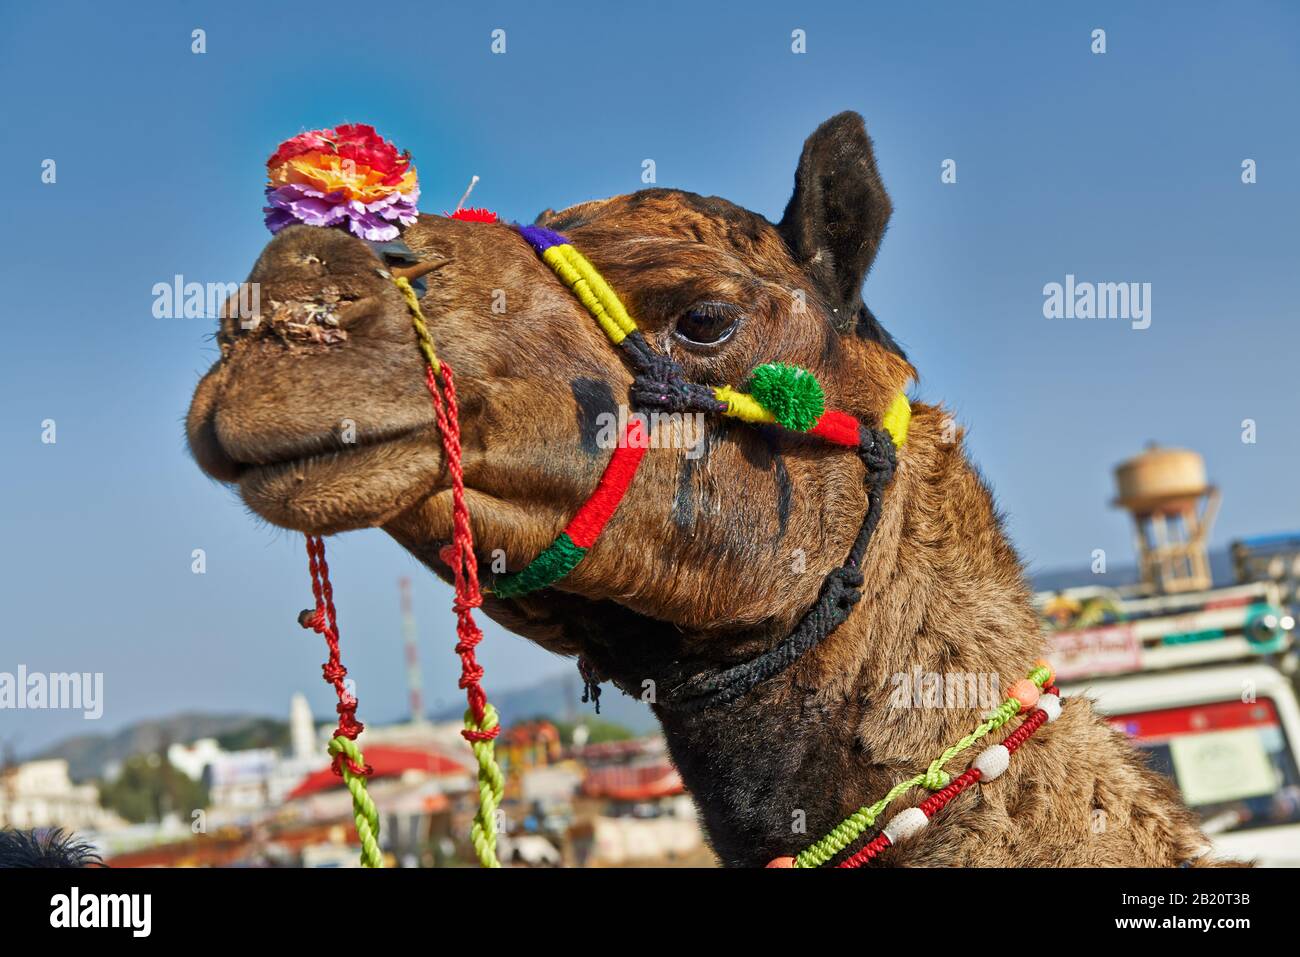 colorful decorated camel on camel and livestock fair, Puskar Mela, Pushkar, Rajasthan, India Stock Photo